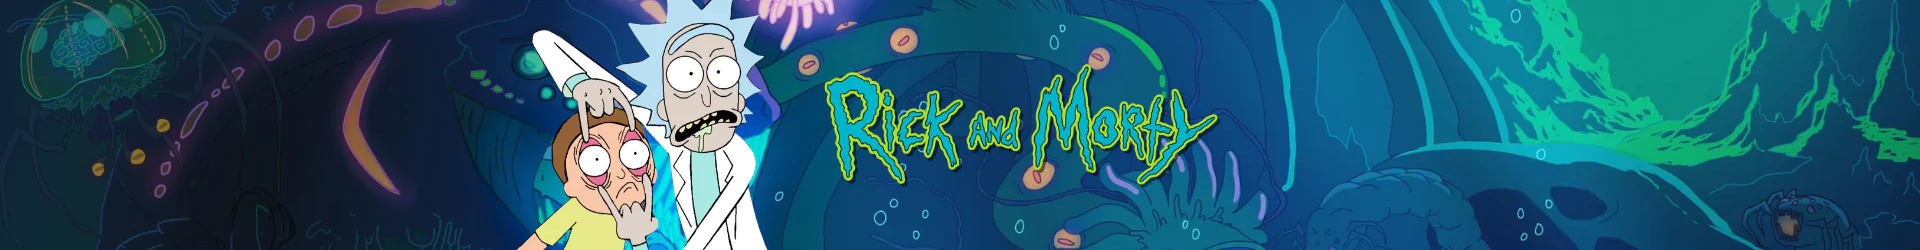 Rick és Morty maszkok banner